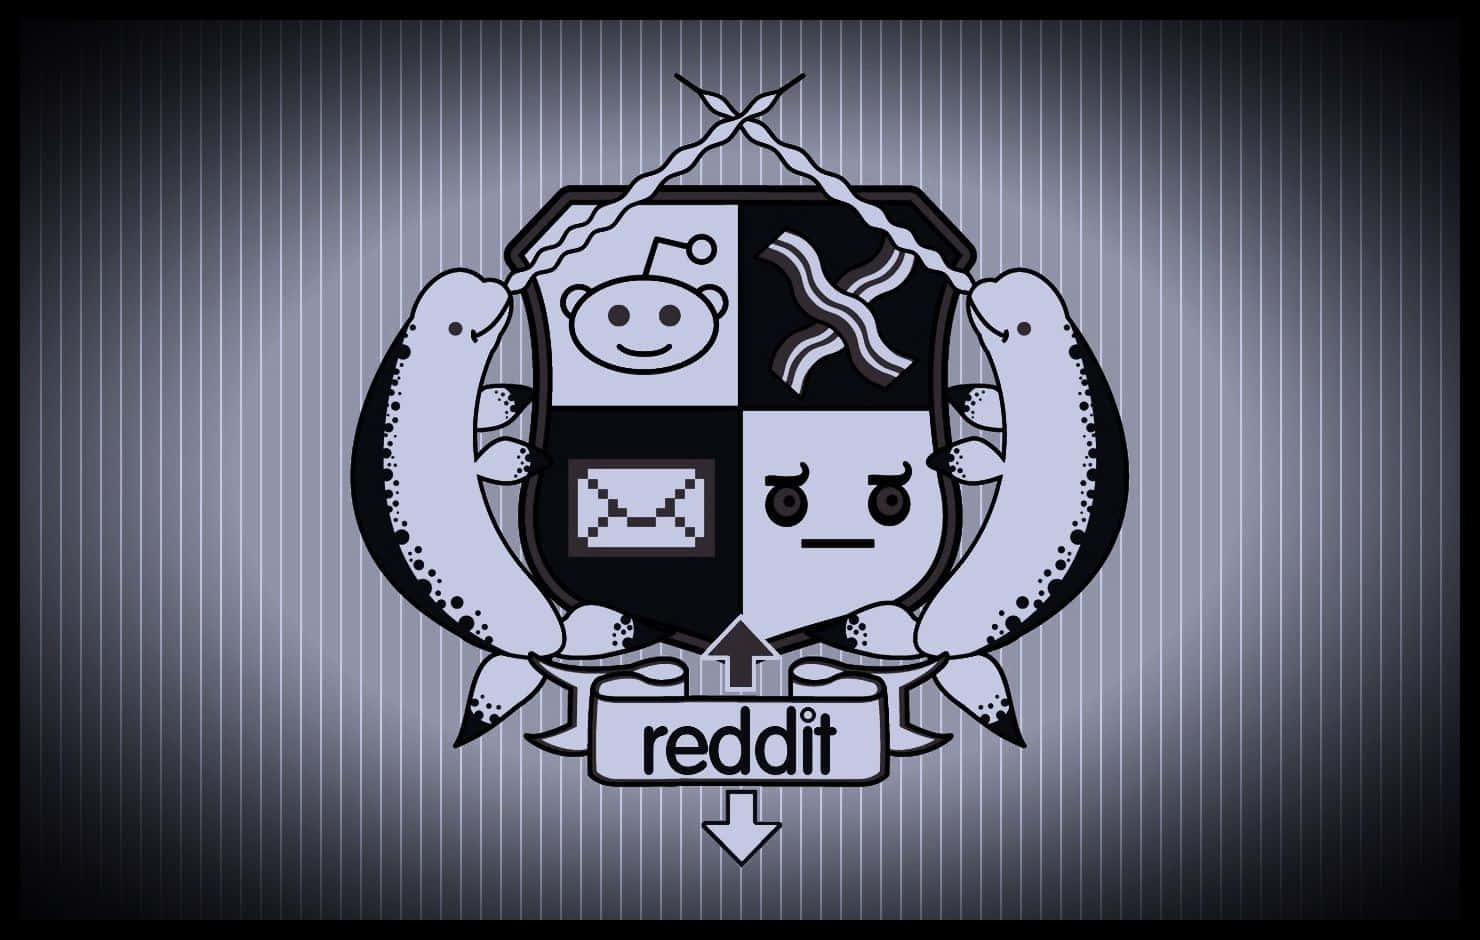 “Explore the World of Reddit”